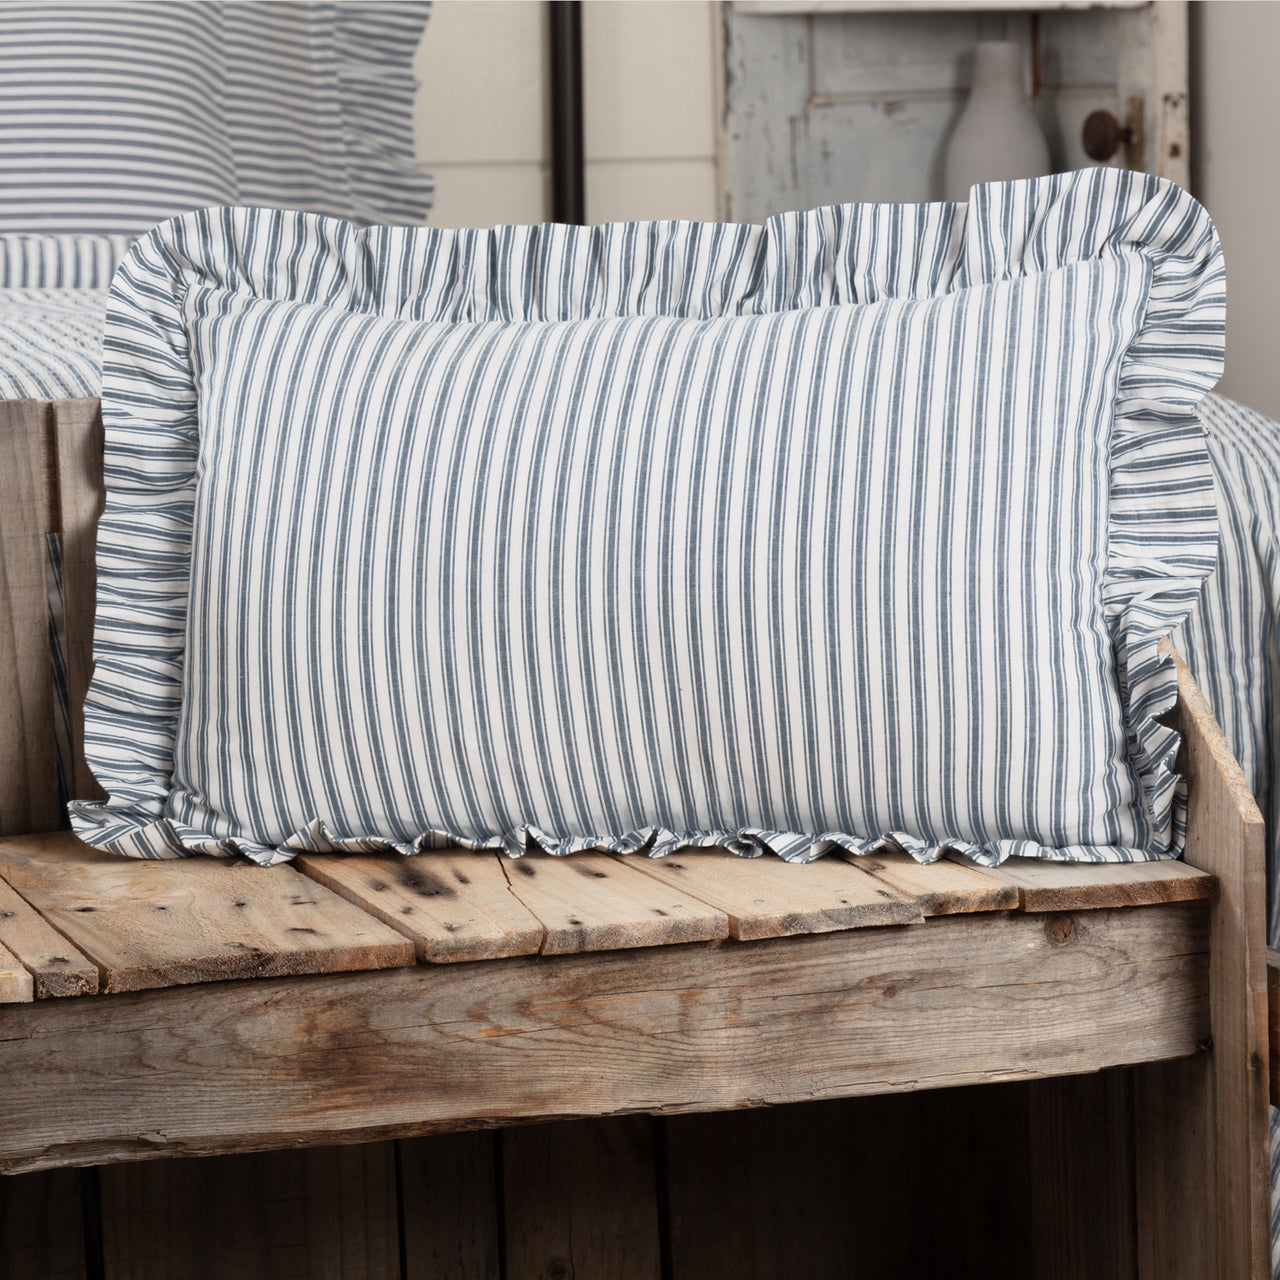 Sawyer Mill Blue Ticking Stripe Fabric Pillow 14x22 VHC Brands